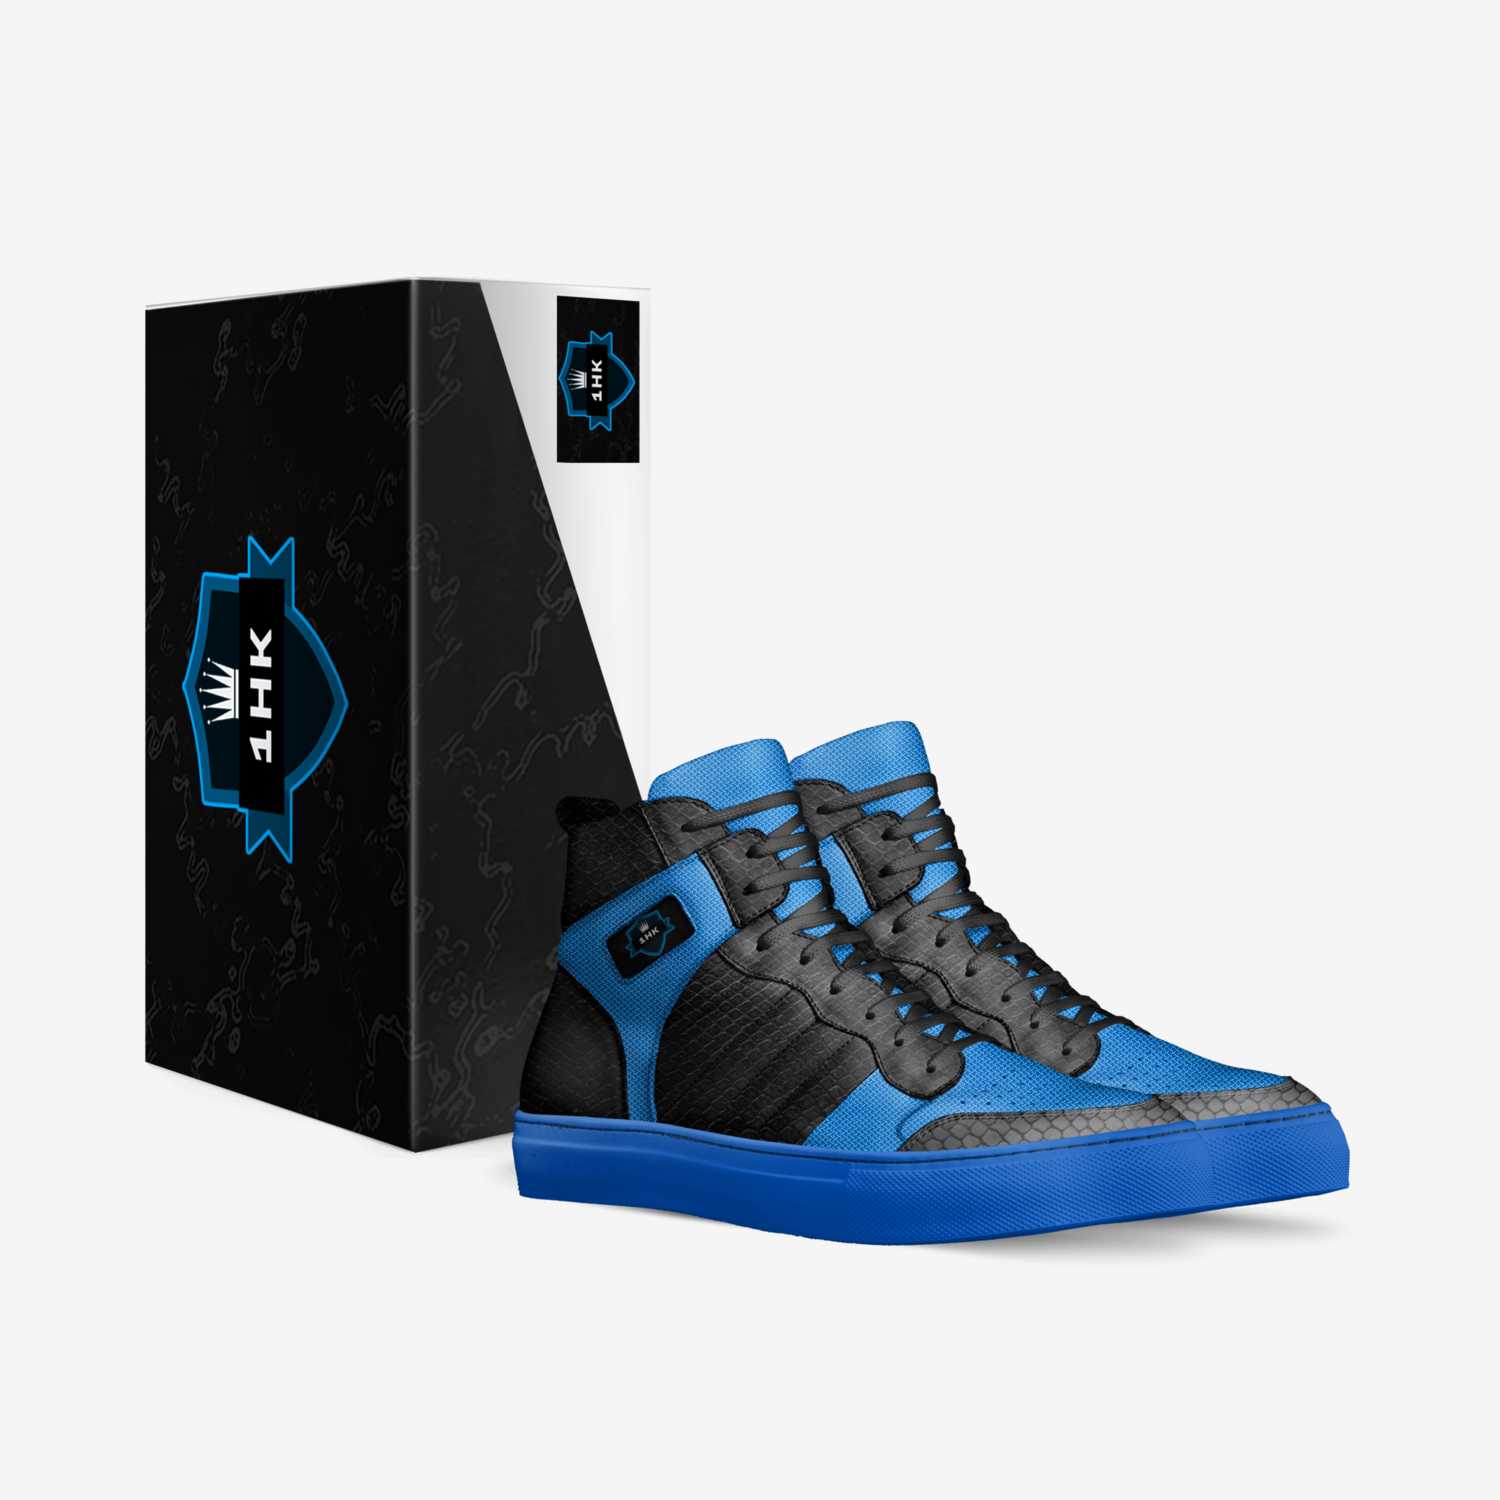 1HK custom made in Italy shoes by Haroldas Kulnys | Box view